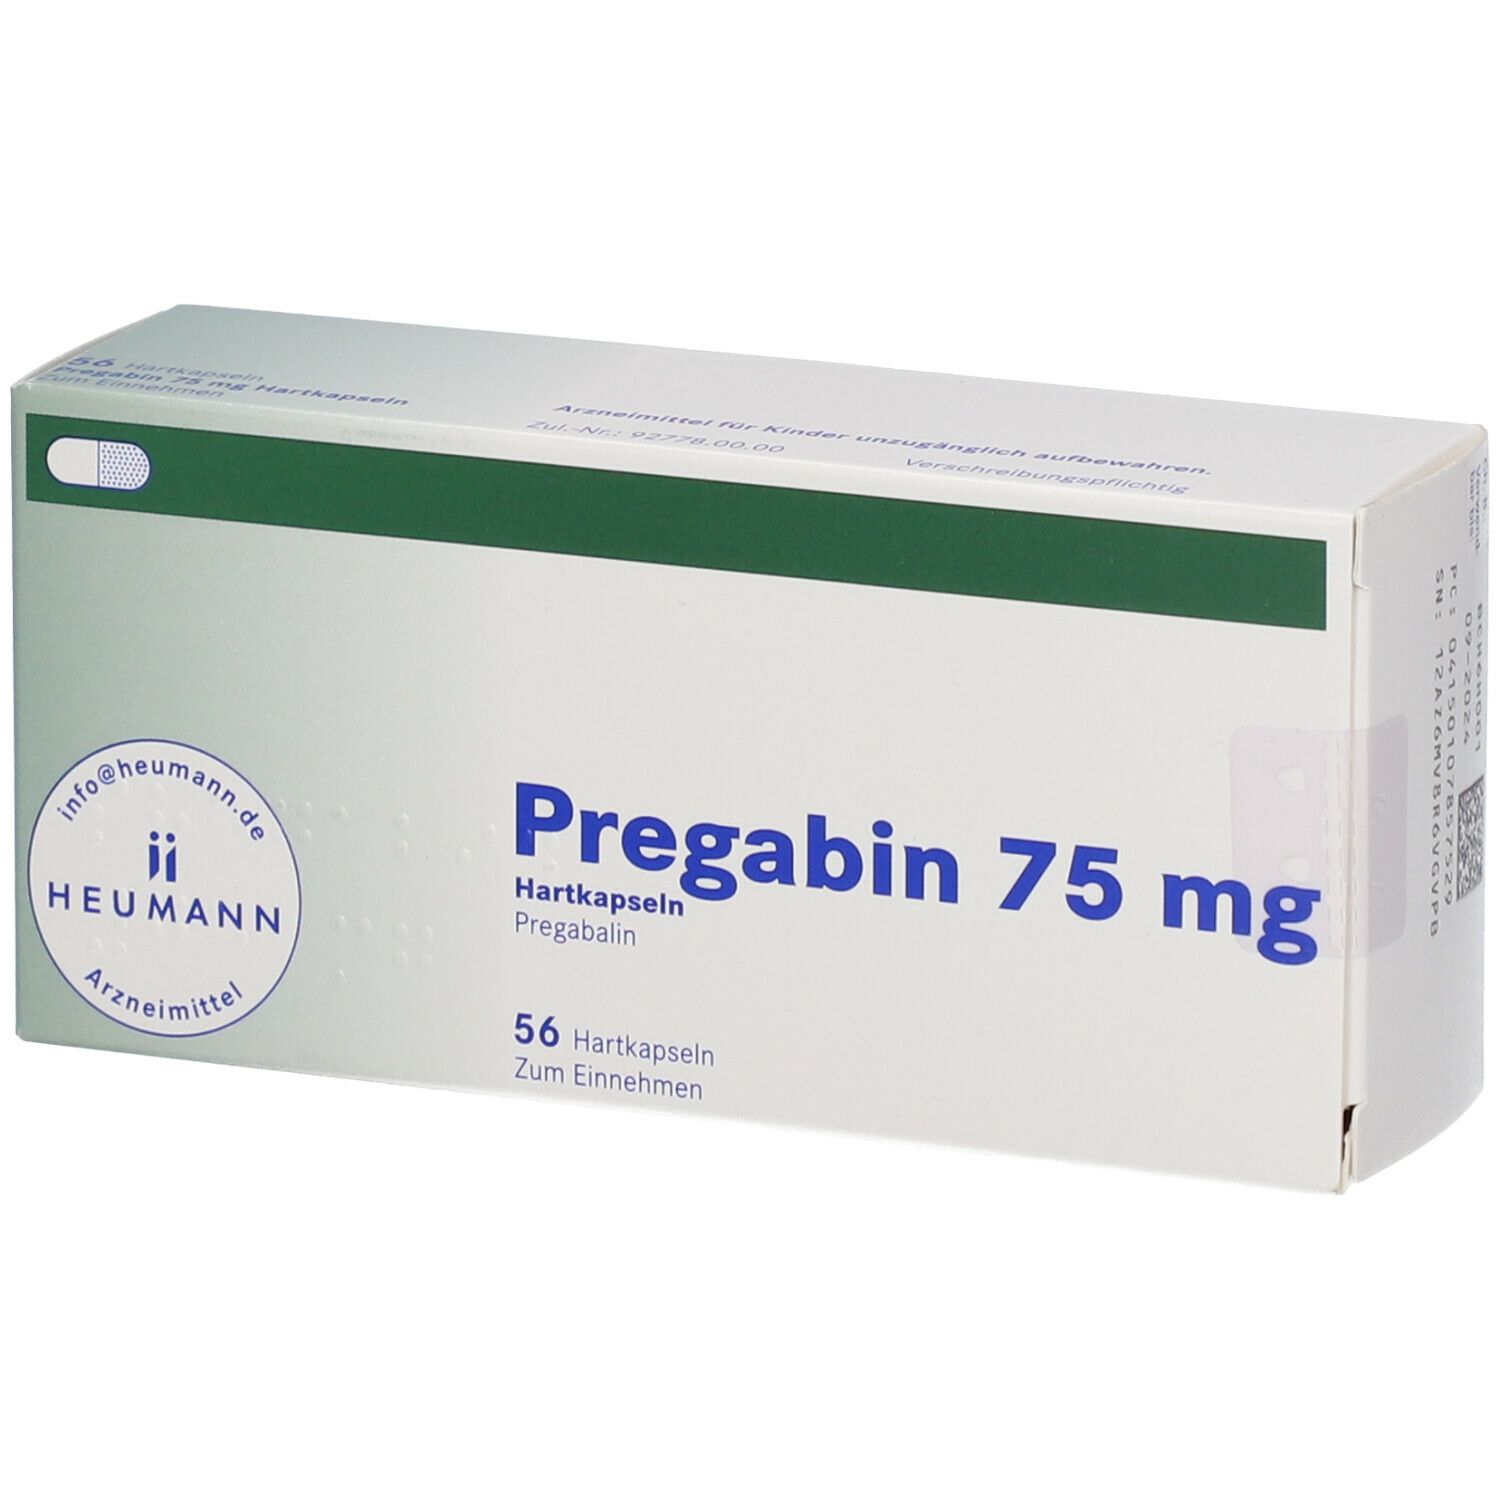 Pregabin 75 mg